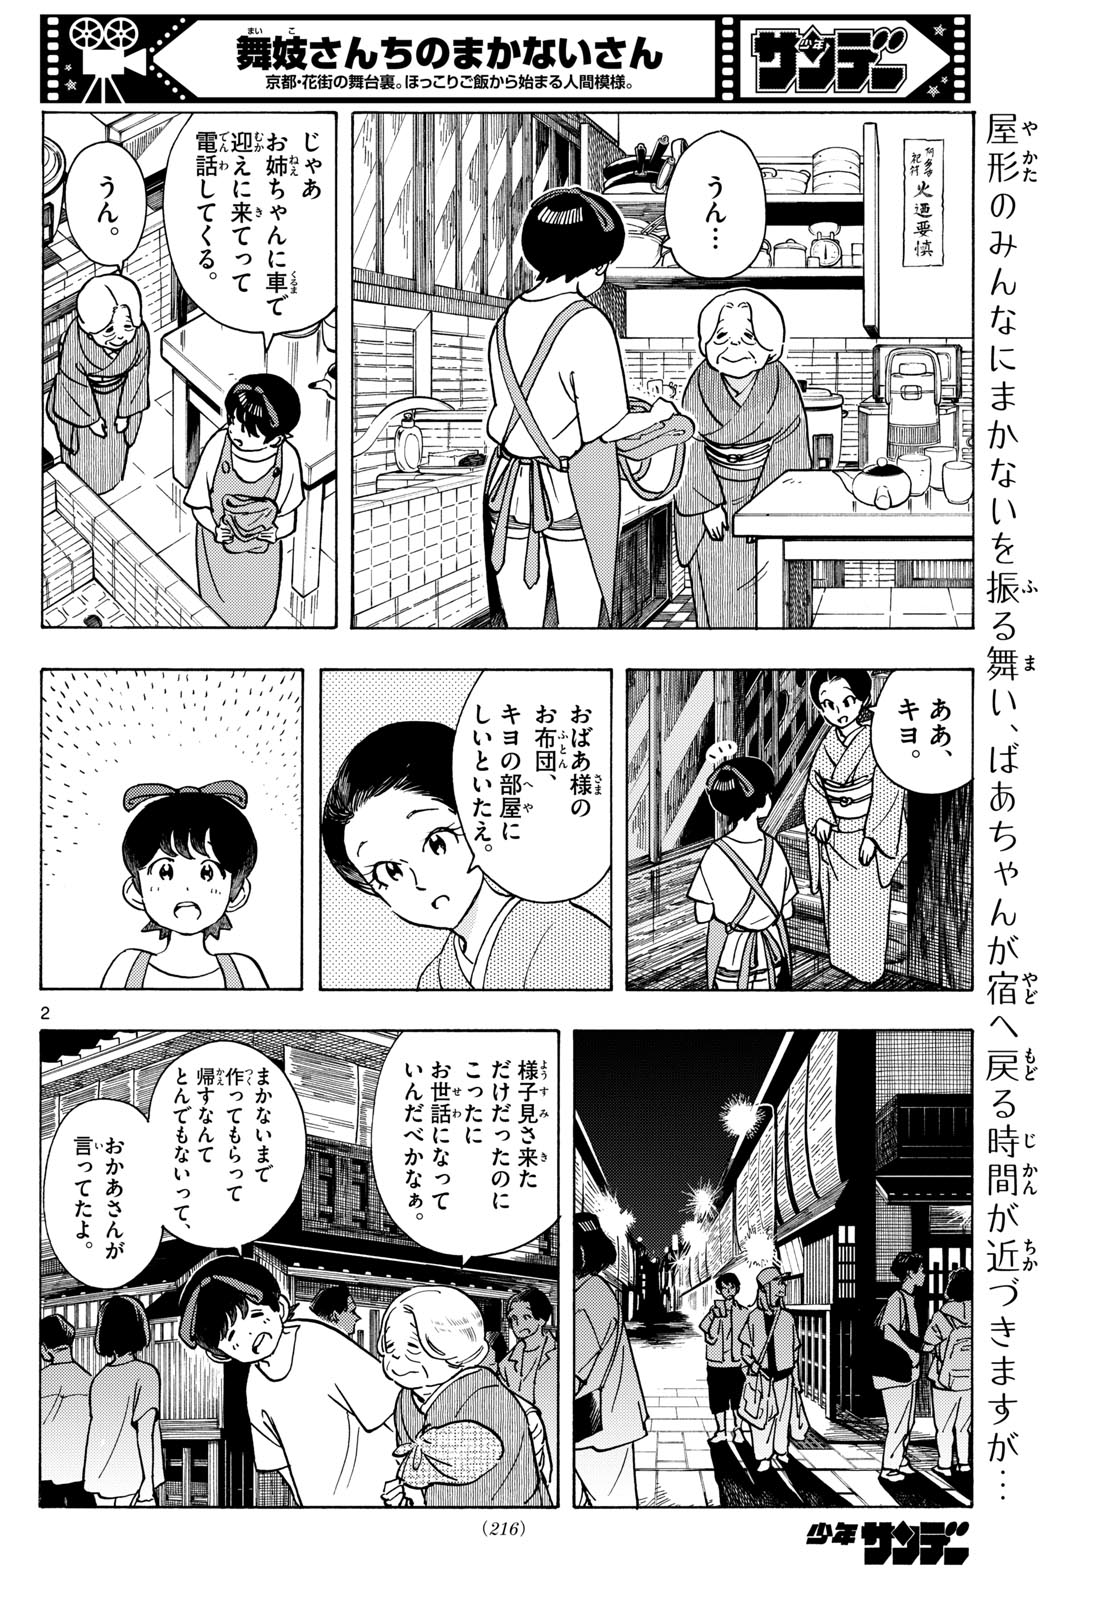 Maiko-san Chi no Makanai-san - Chapter 305 - Page 2